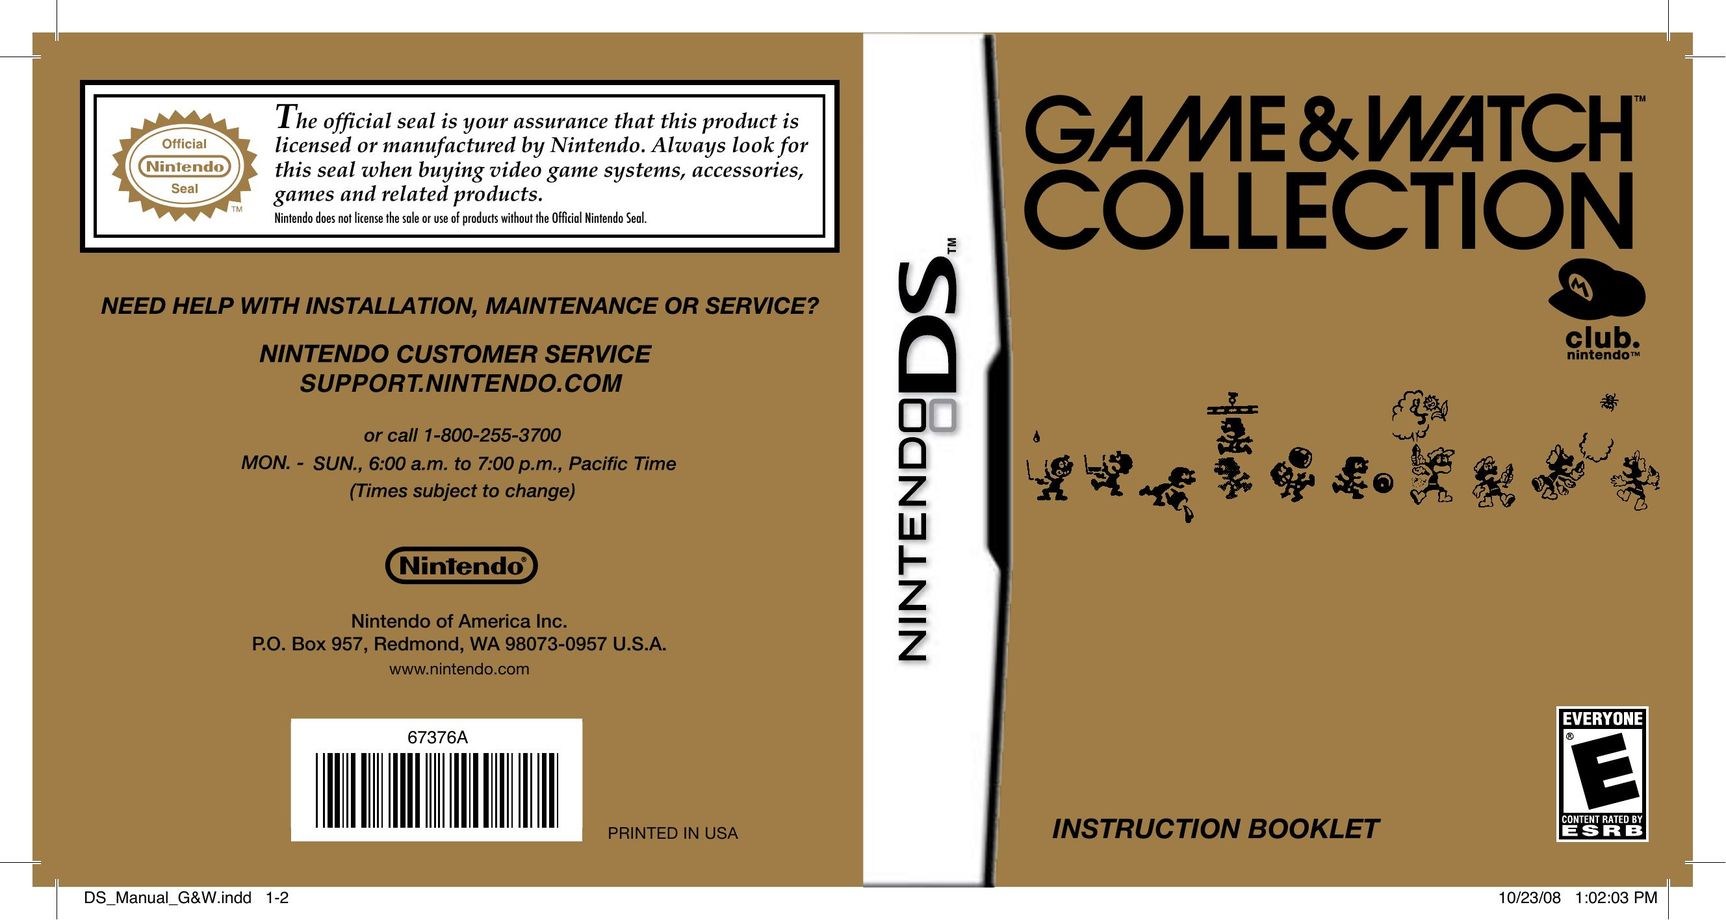 Nintendo 67376A Video Games User Manual